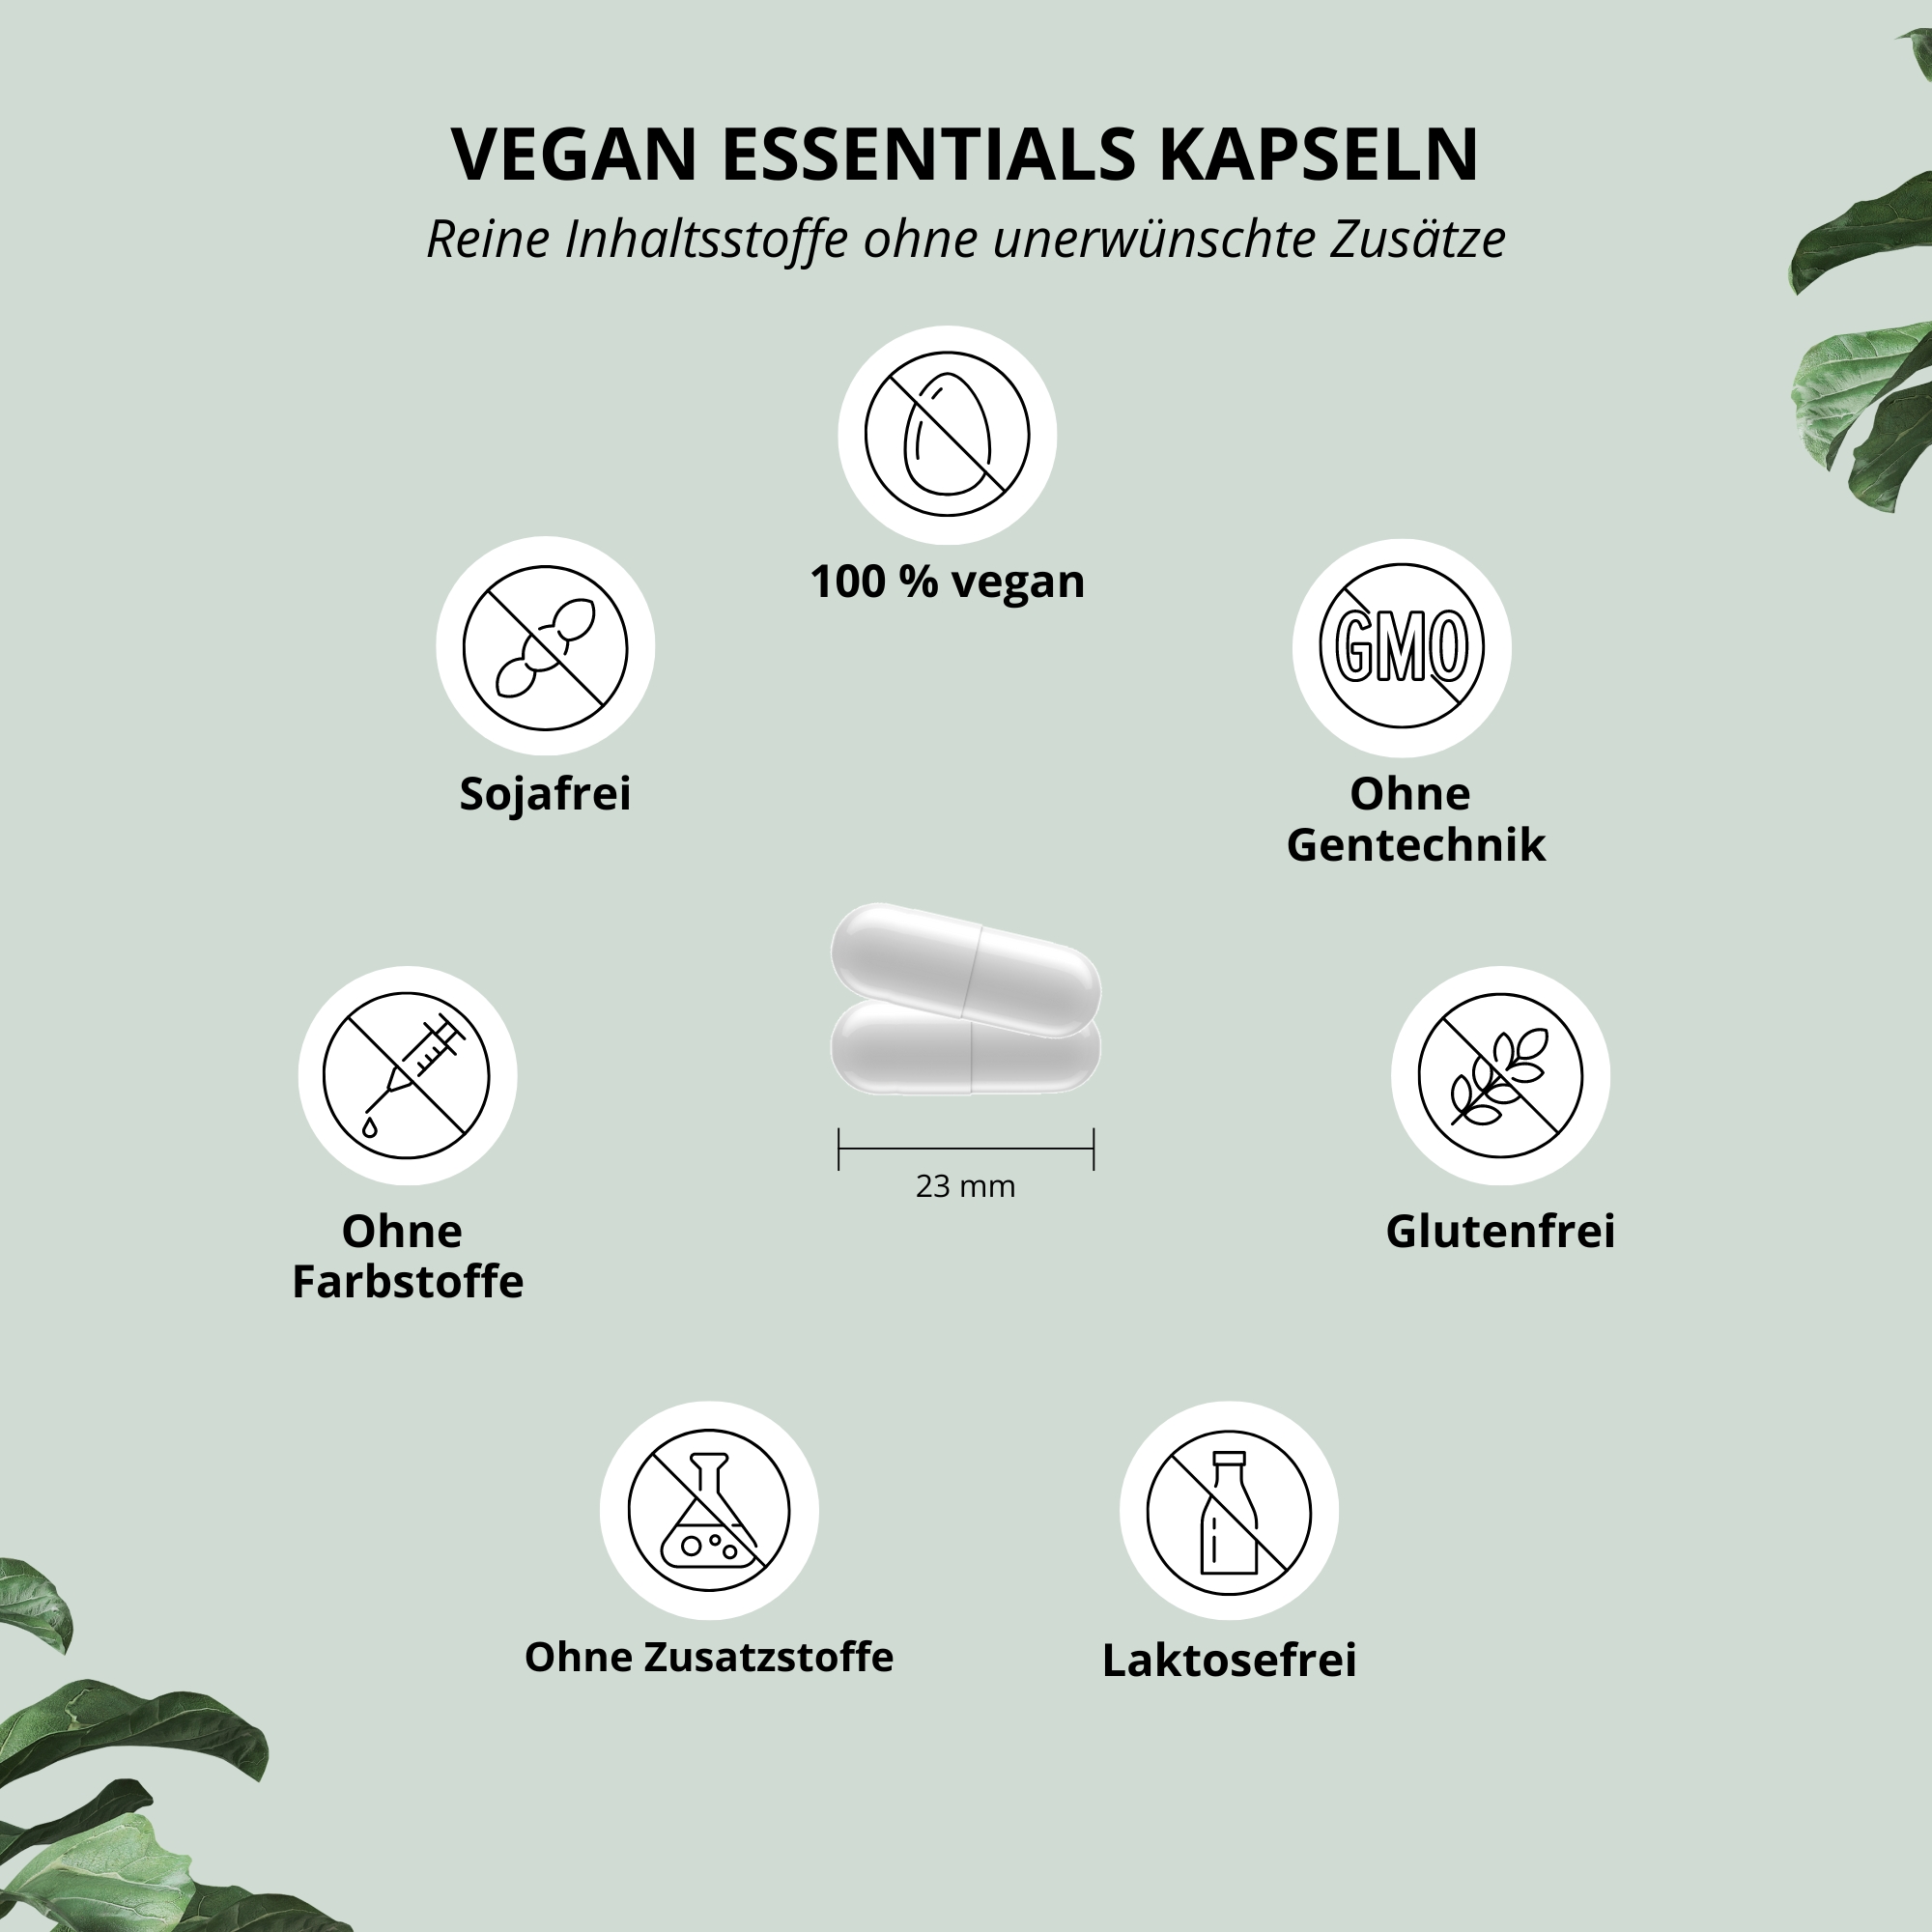 Vegan Essentials Kapseln